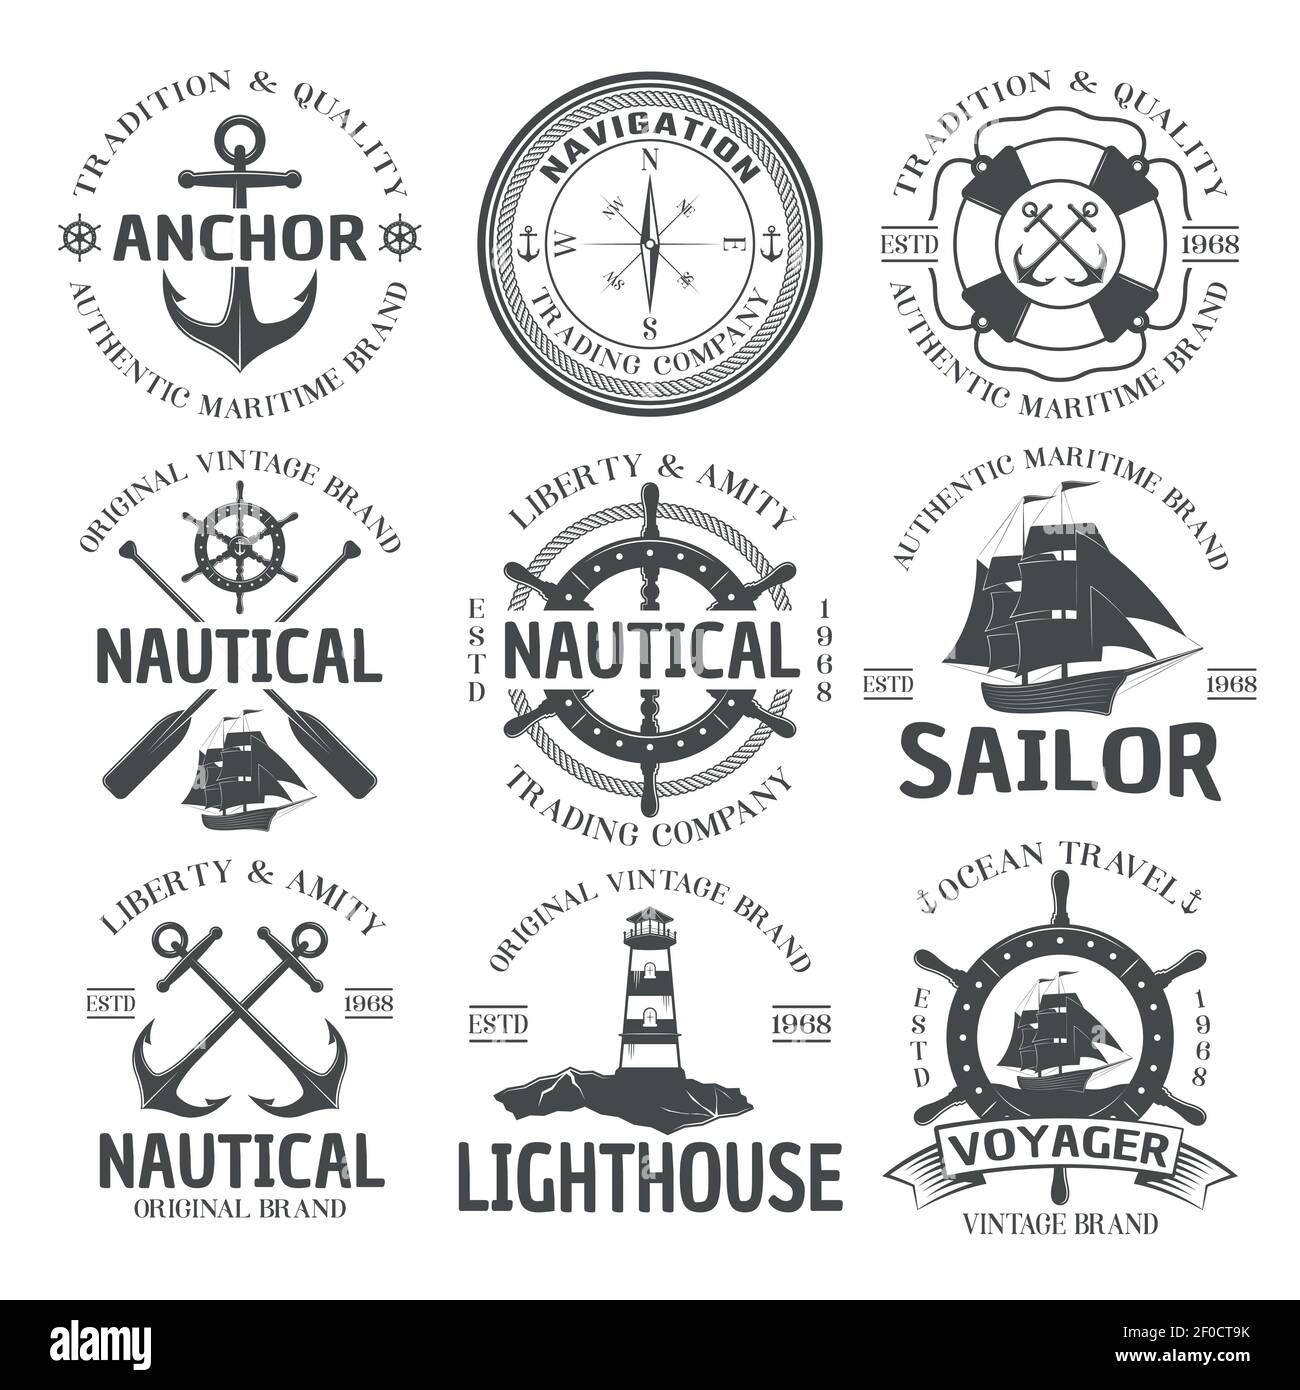 Nautical emblem set with anchor authentic maritime brand navigation trading company nautical original vintage brand descriptions vector illustration Stock Vector